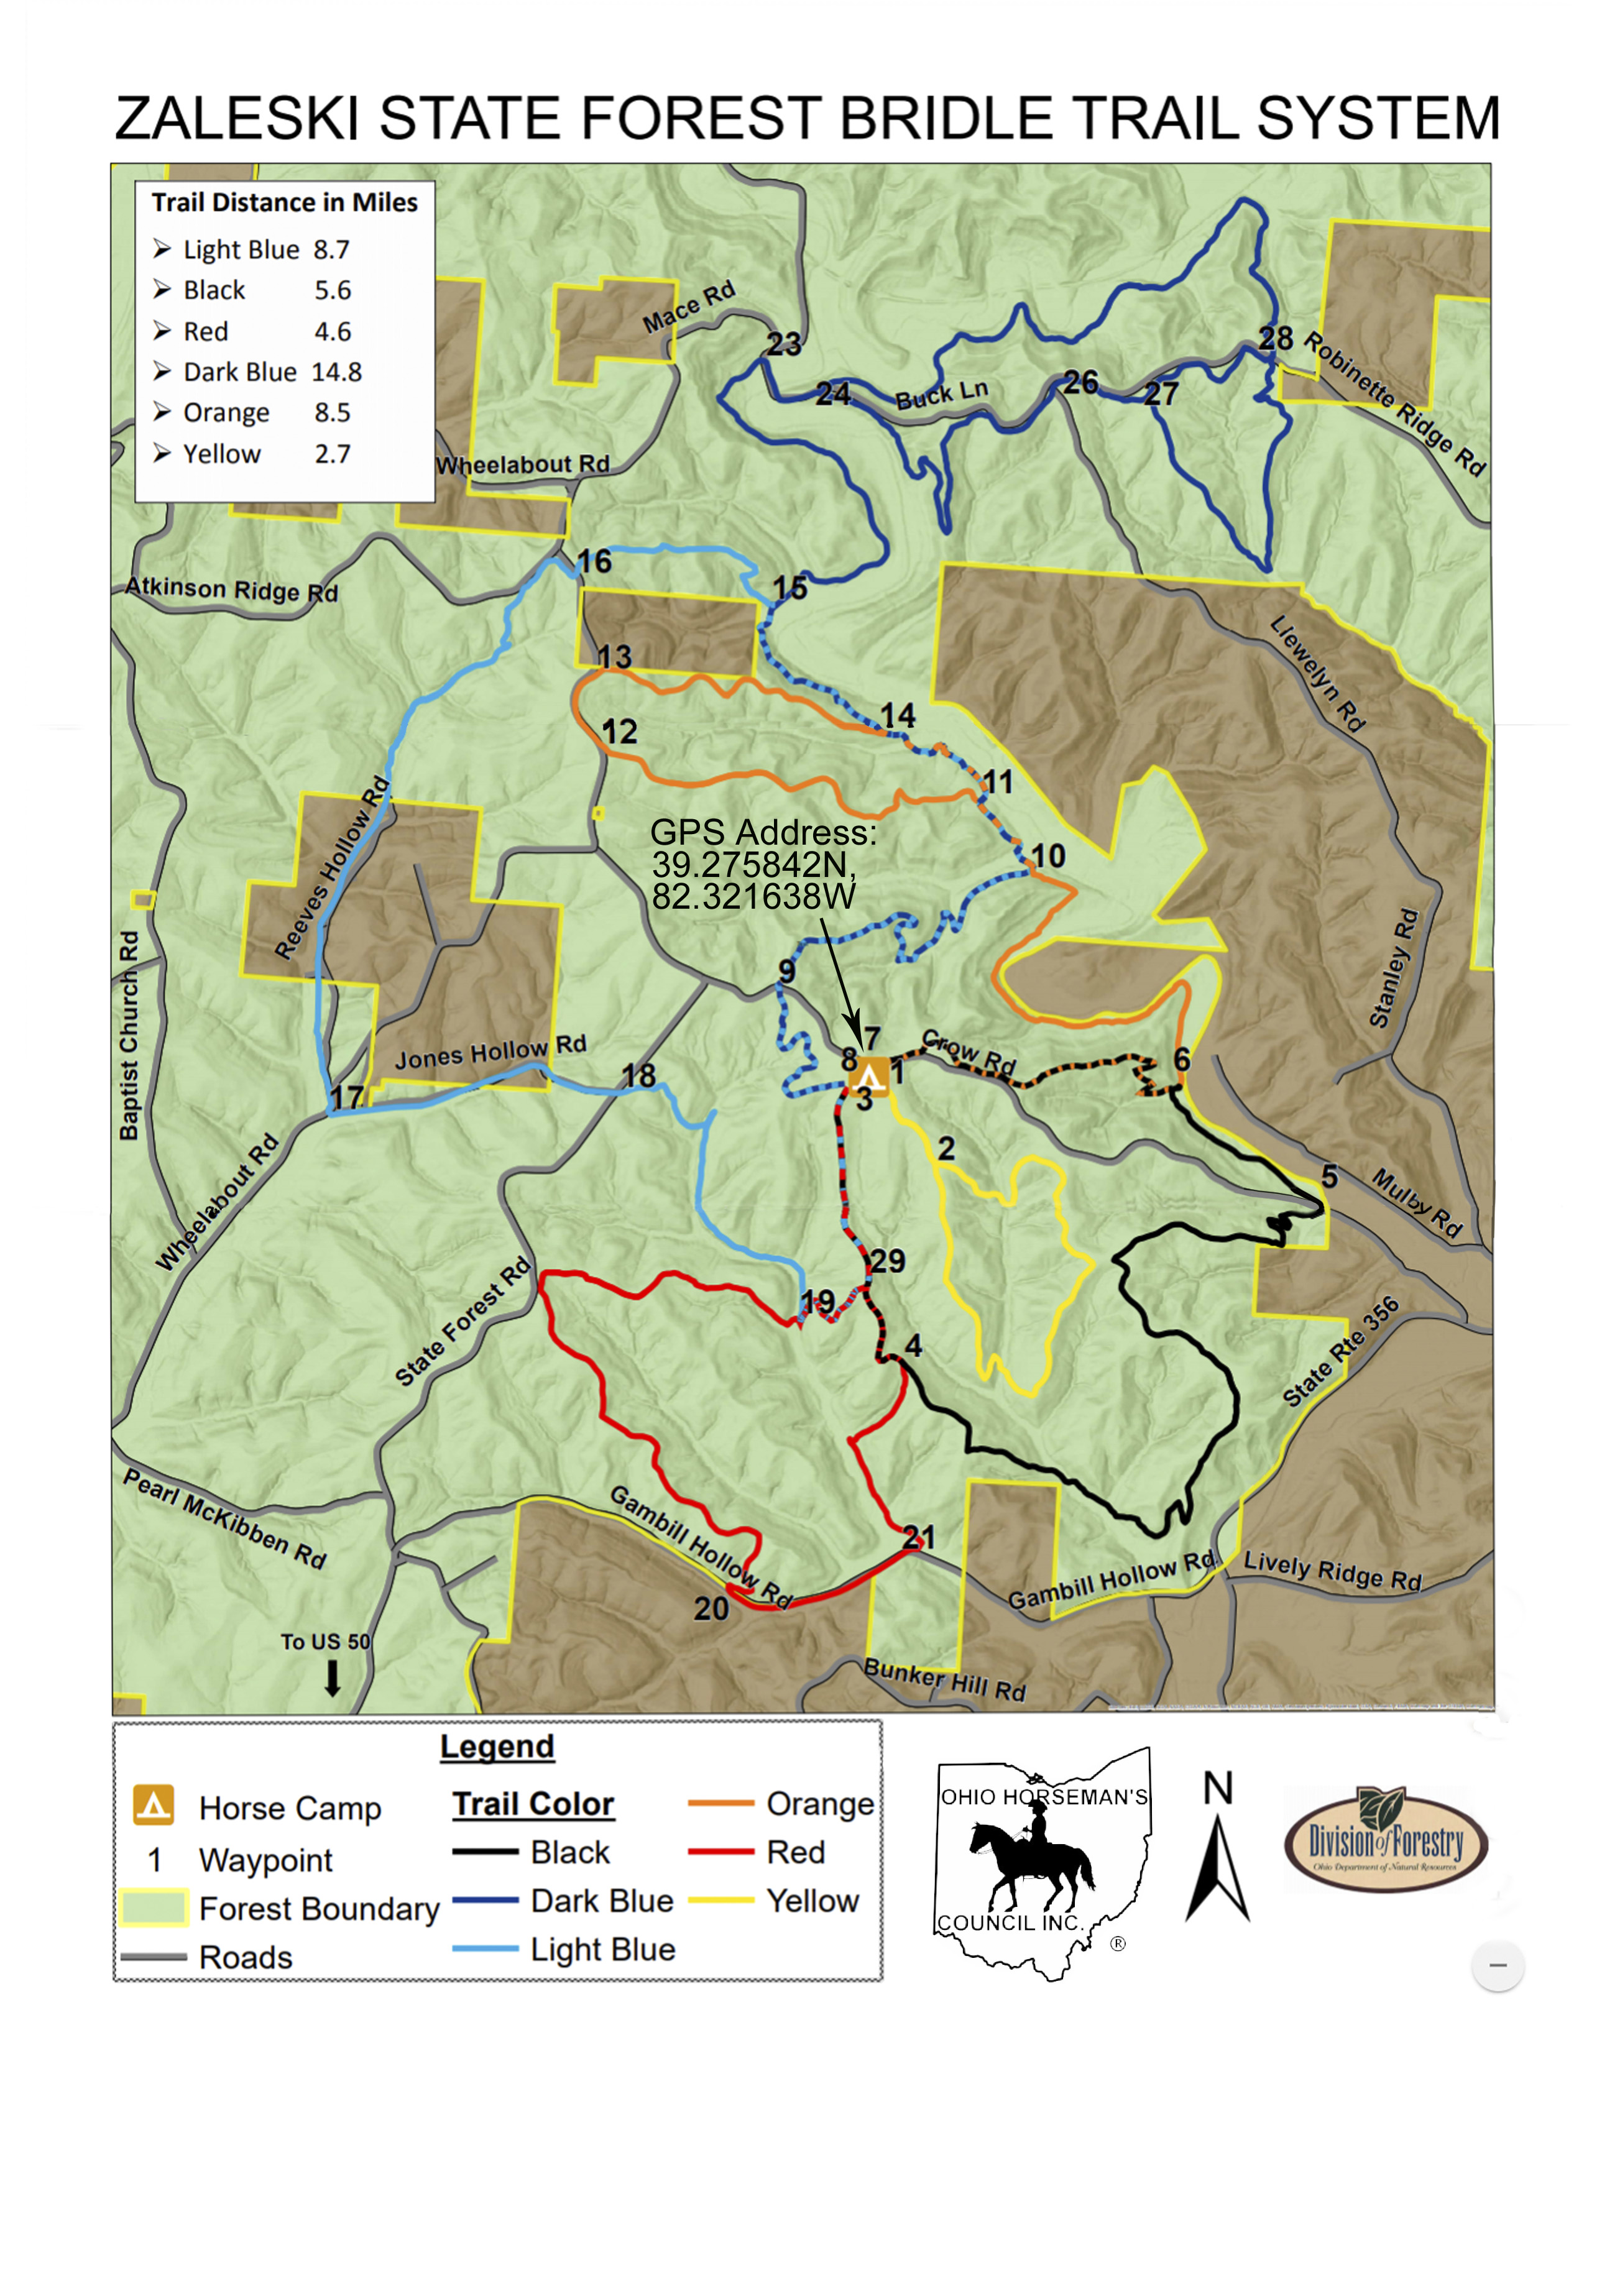 Zaleski Bridle State Forest Trail System